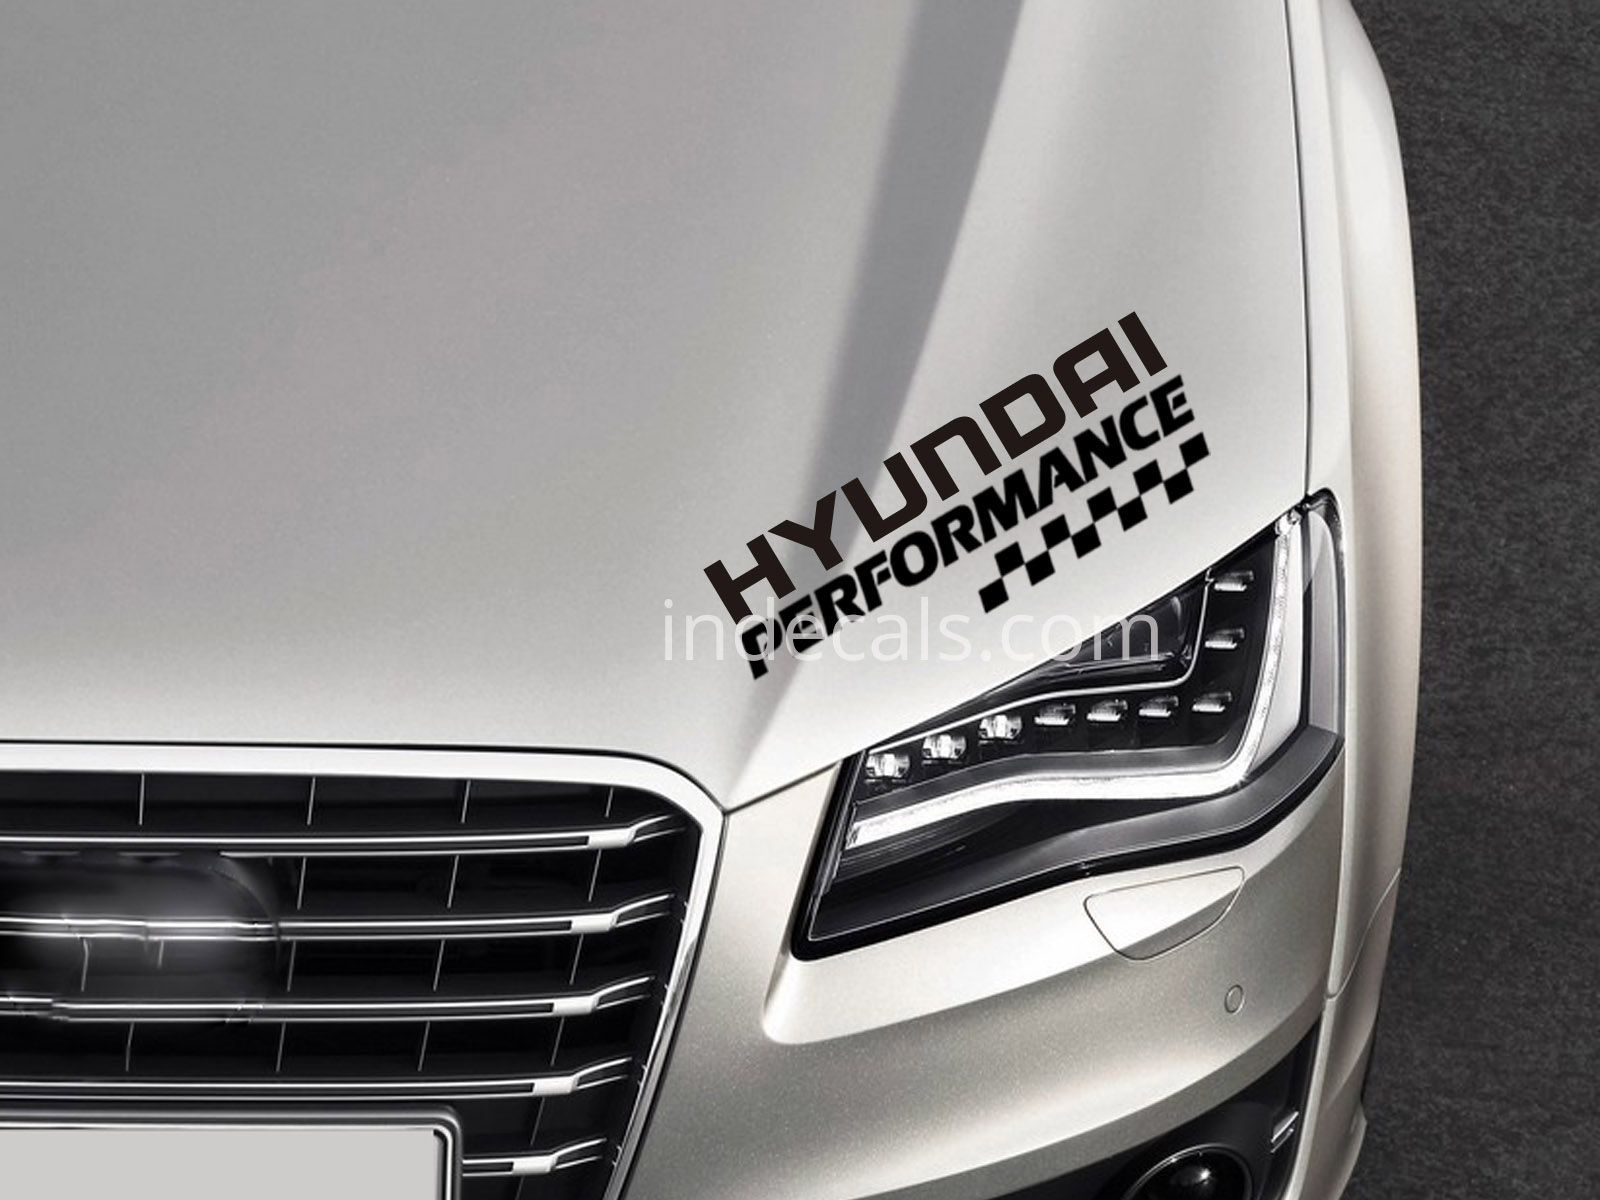 1 x Hyundai Performance Sticker - Black